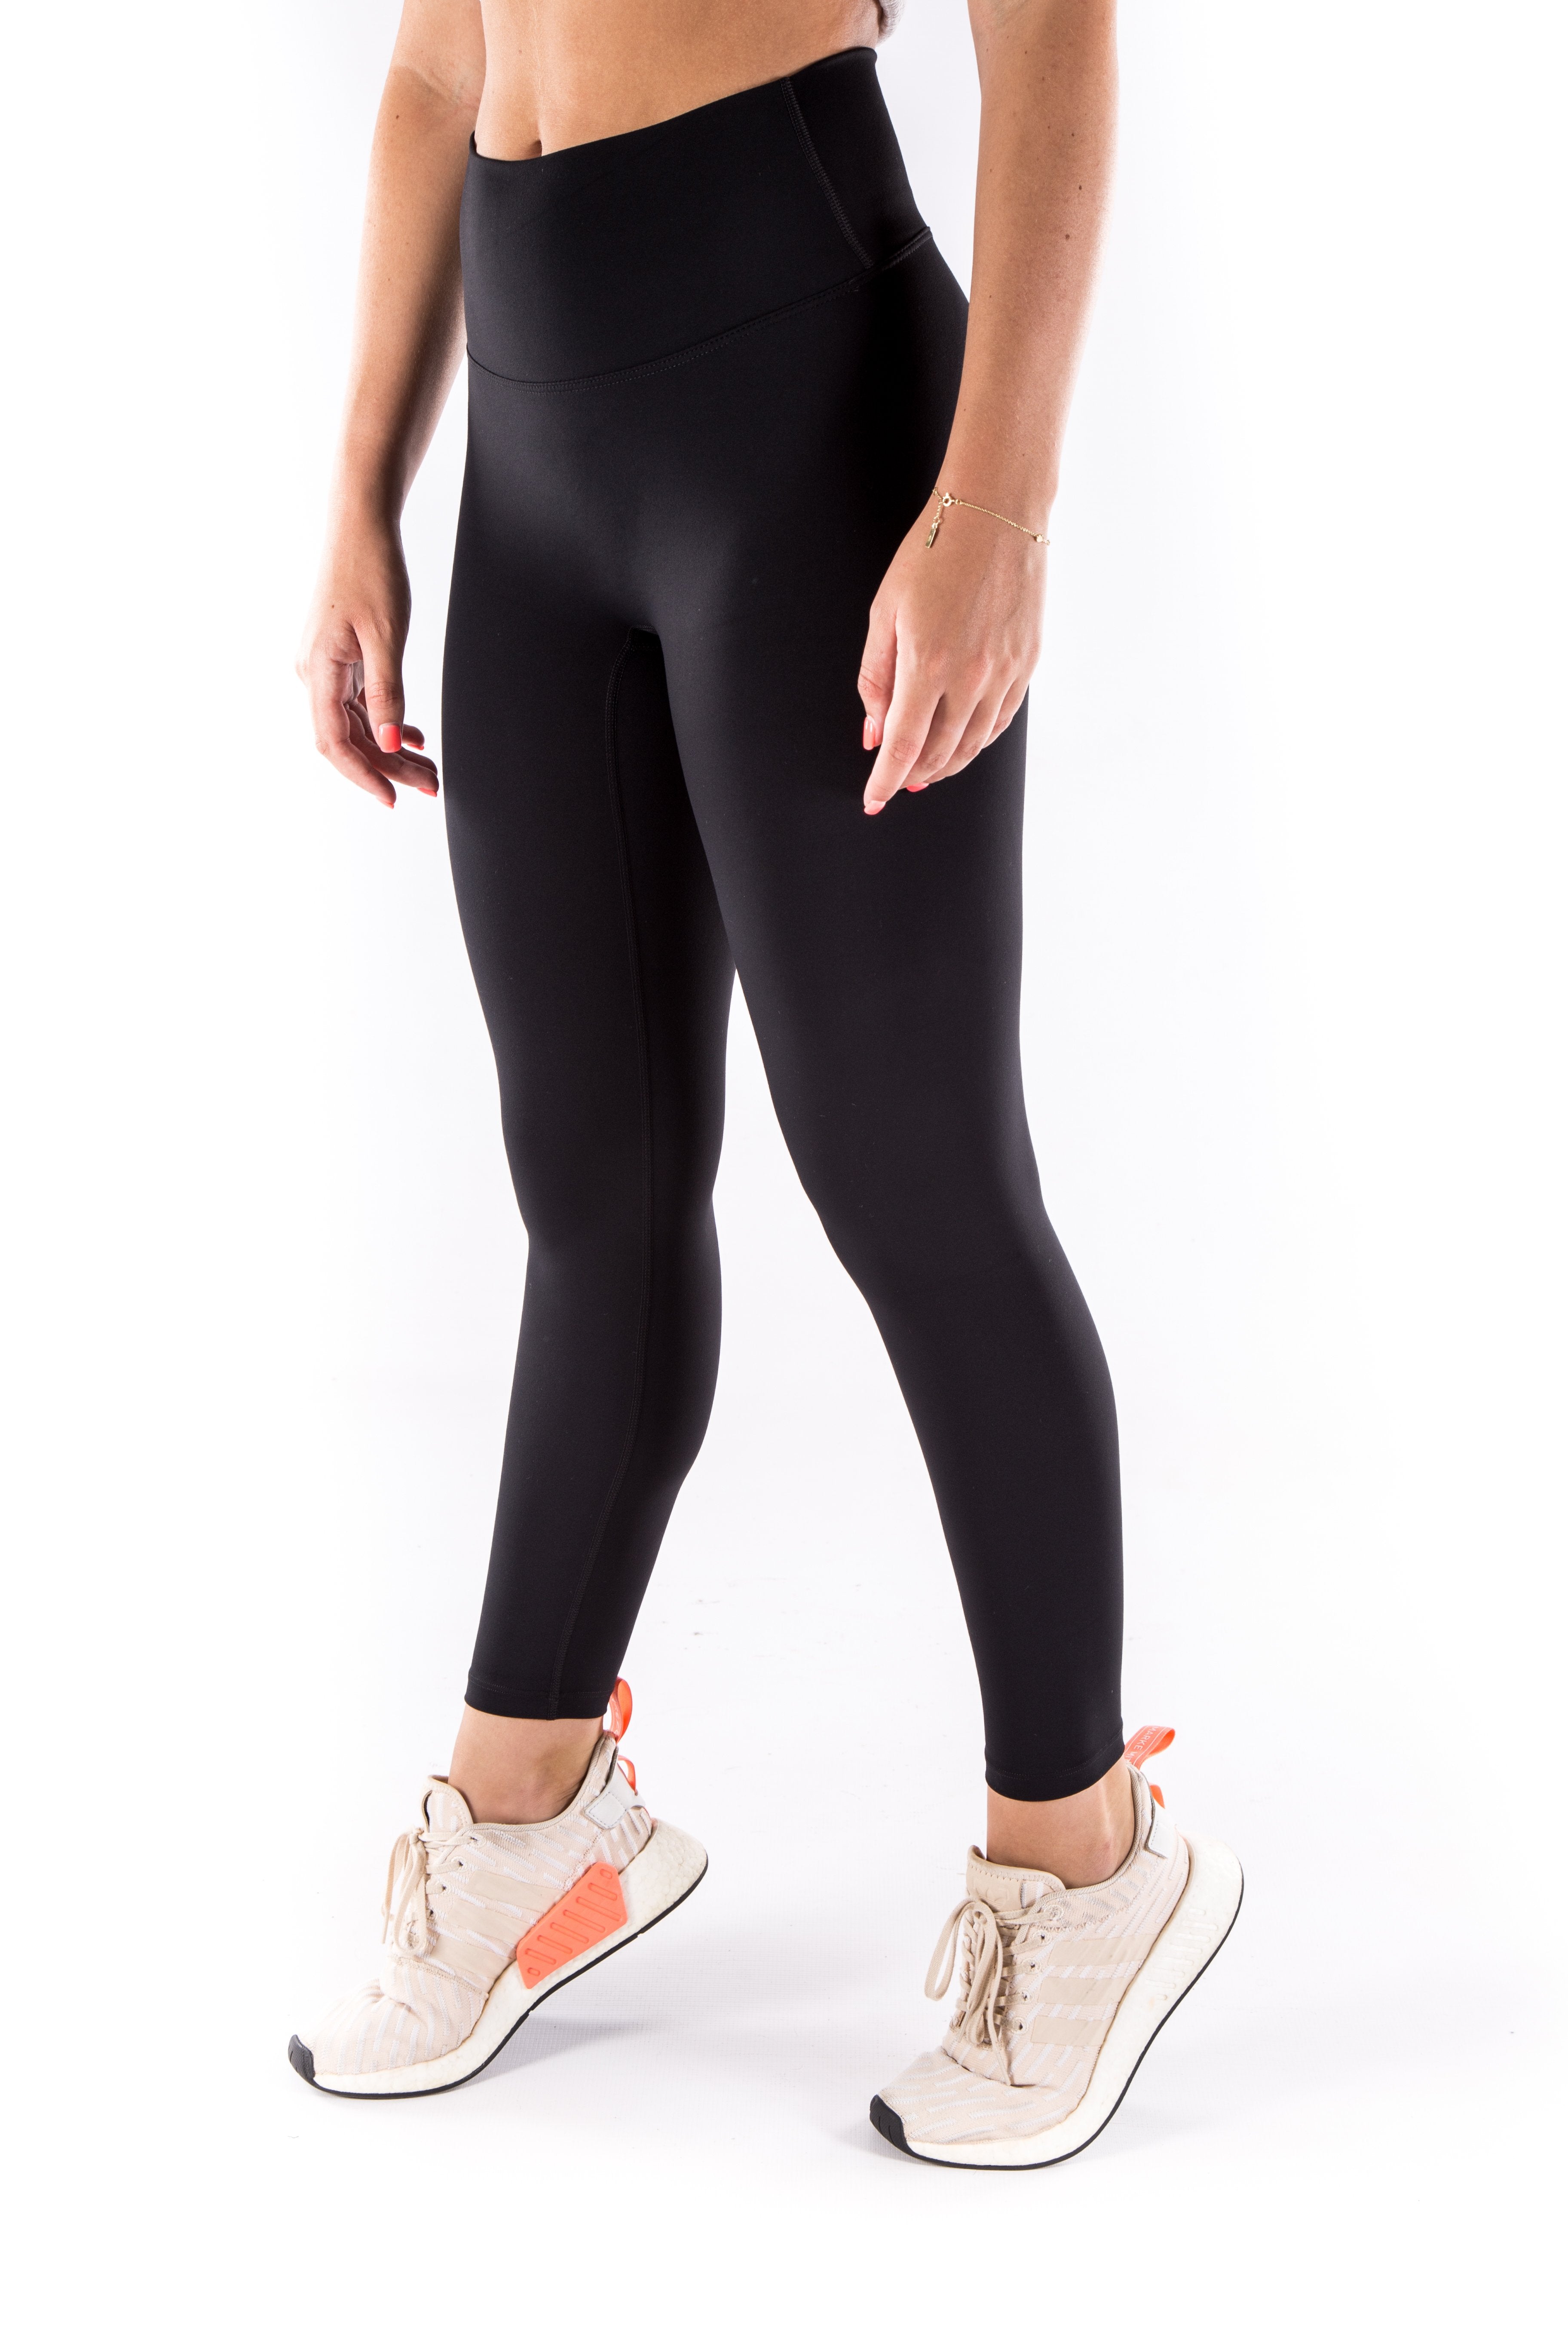 Image of Wonderfit Lulu  - Buttery soft Yoga Pants- Black